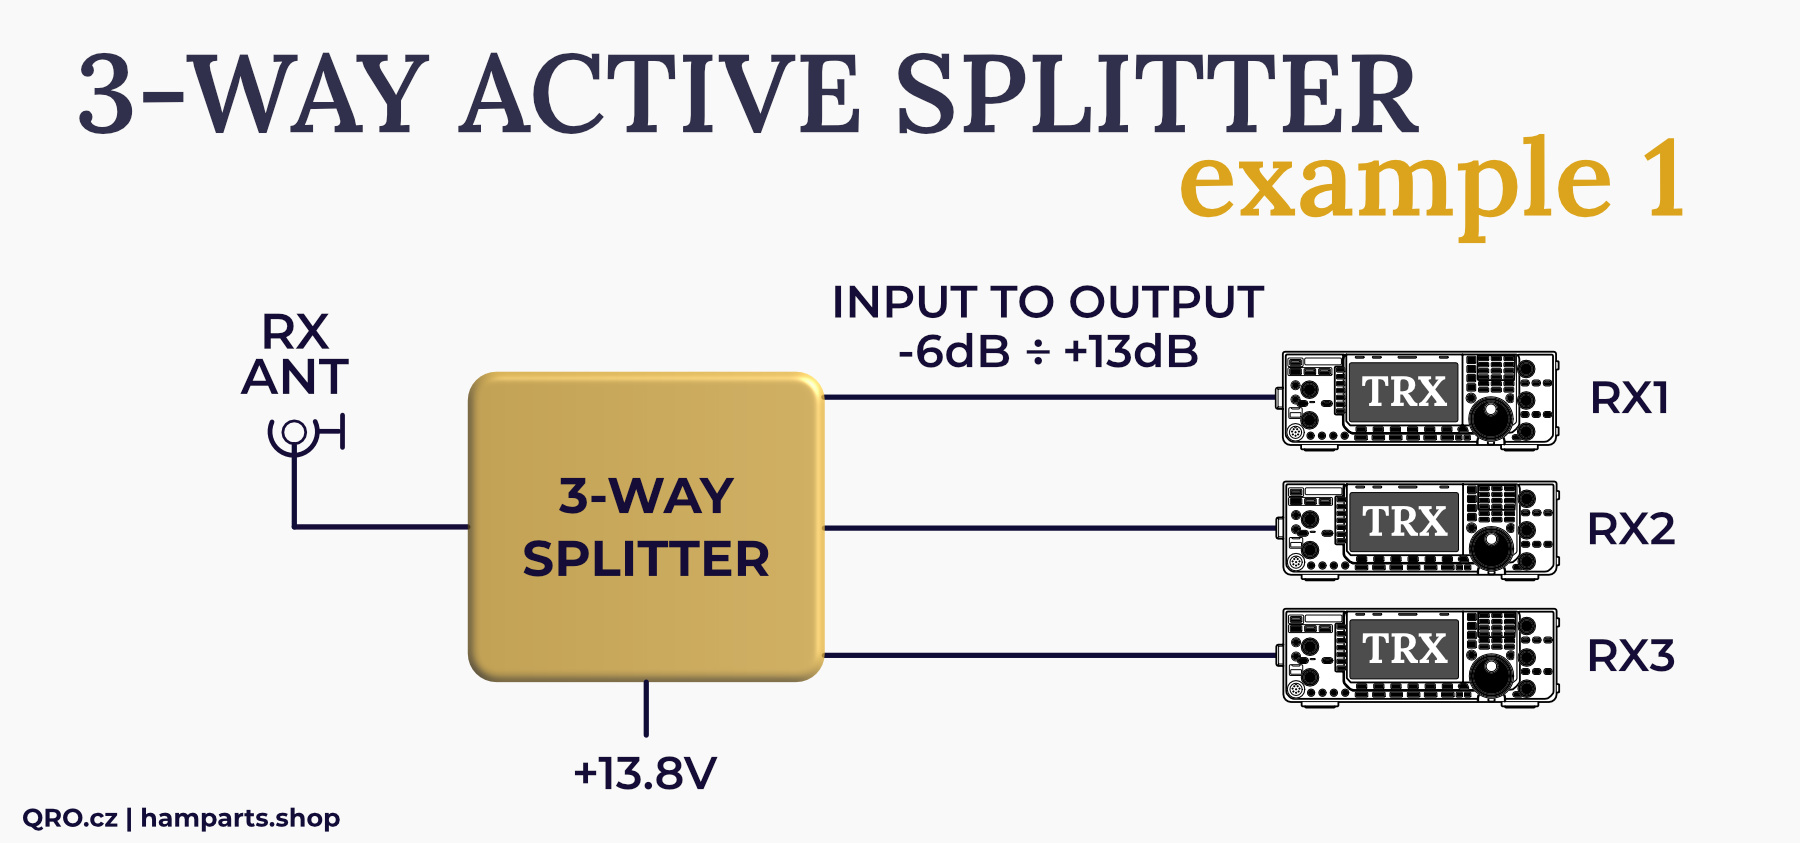 3-way active splitter by qro.cz hamparts.shop